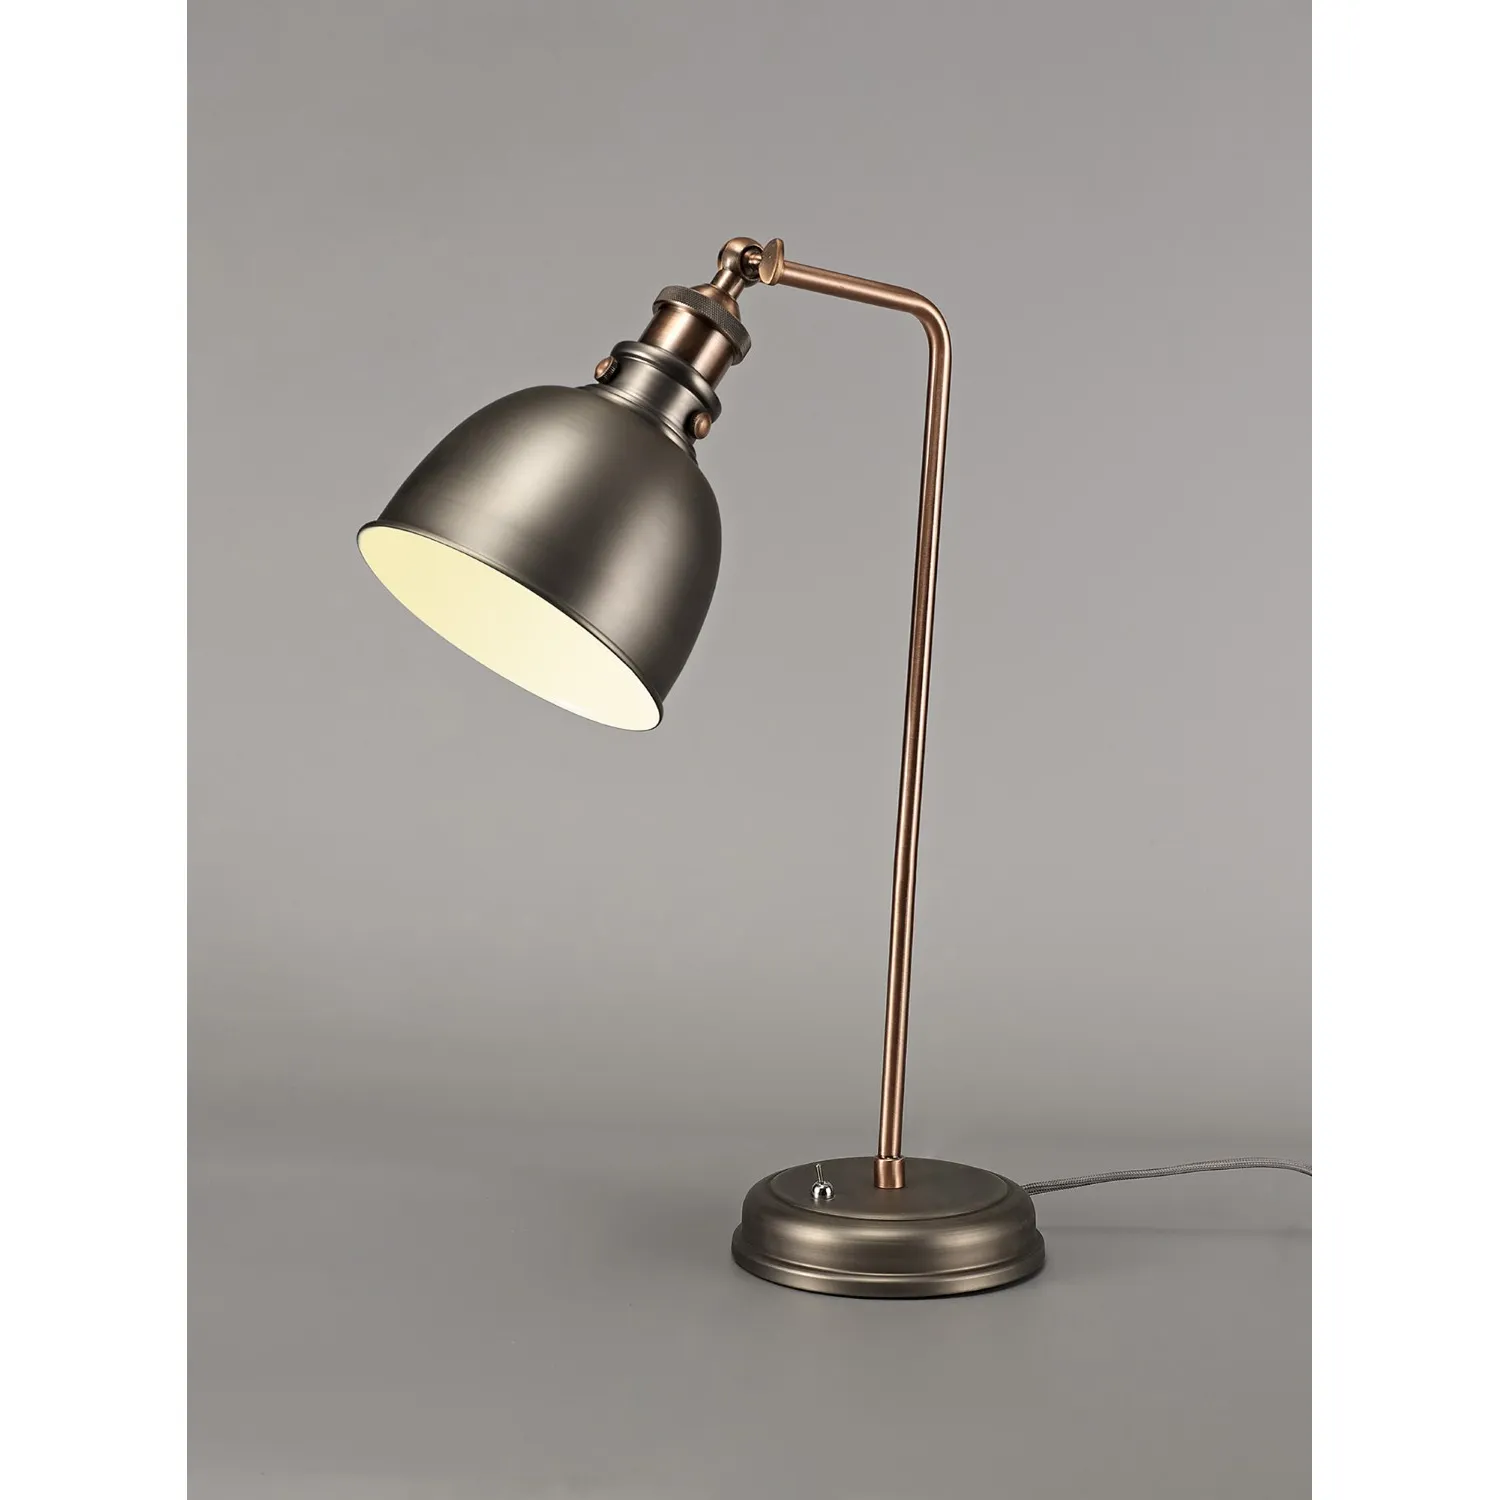 Savoy Adjustable Table Lamp, 1 x E27, Antique Silver Copper White